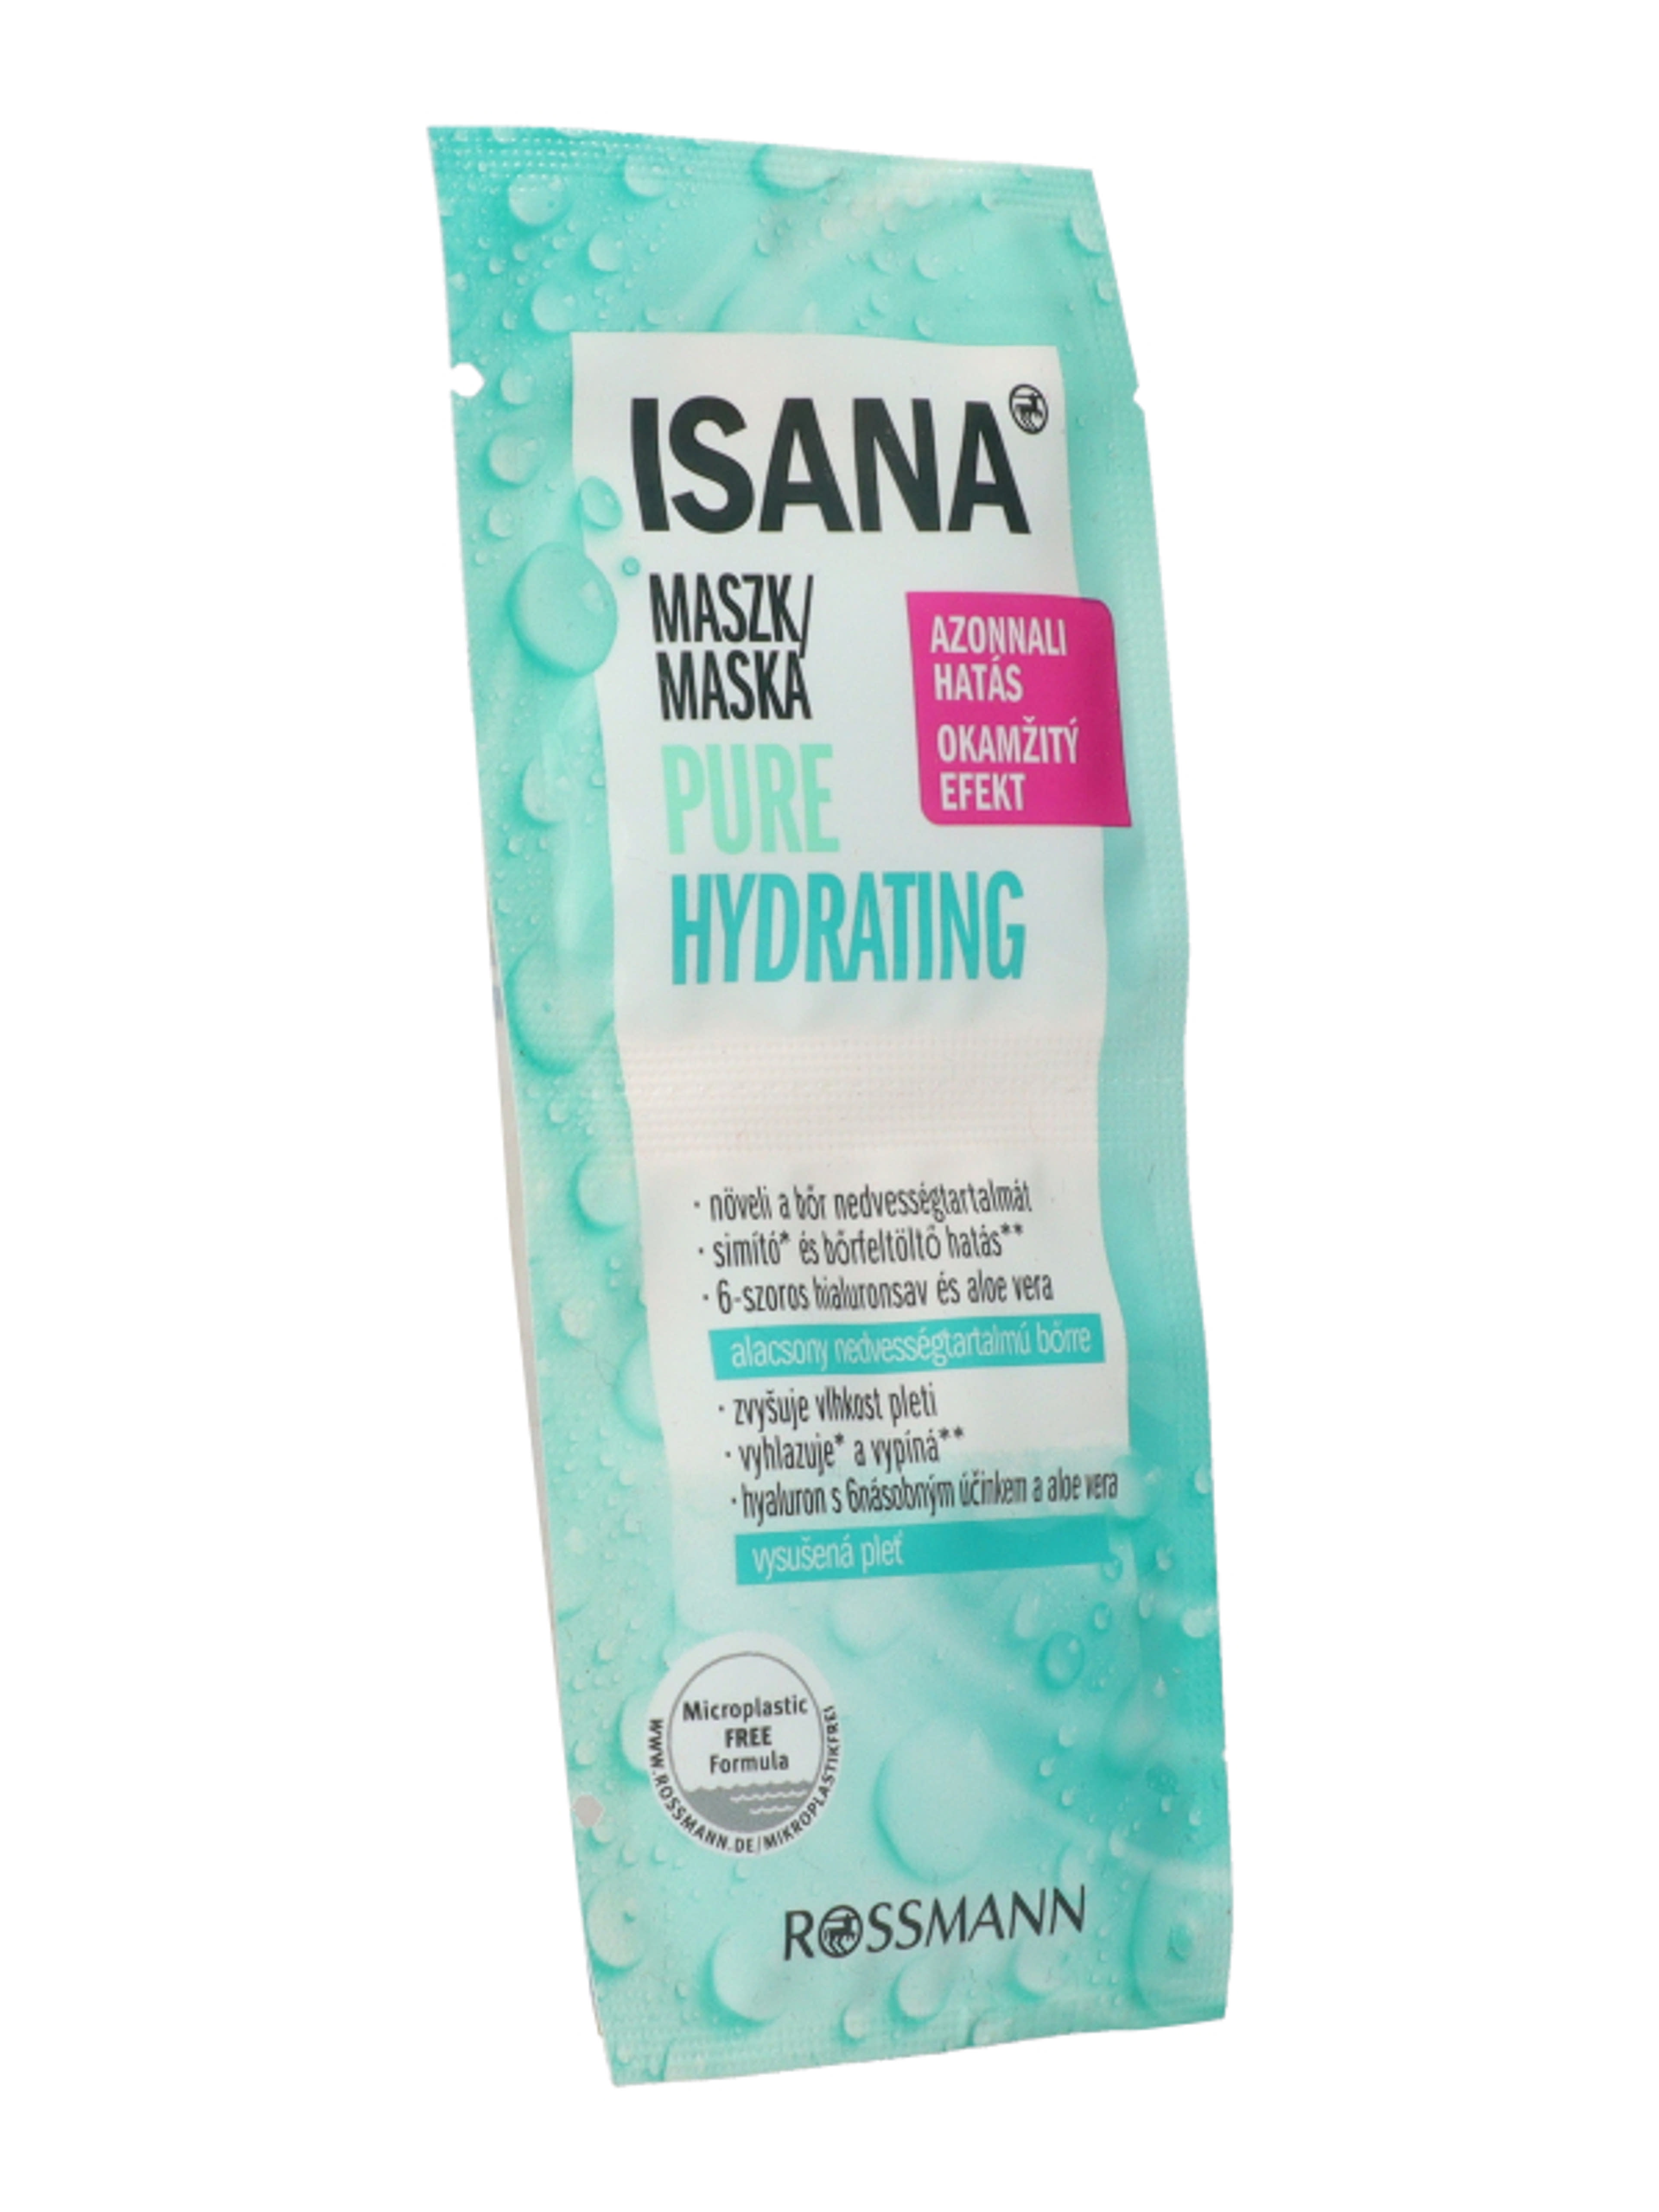 Isana Pure Hydrating maszk 2x8 ml - 16 ml-4